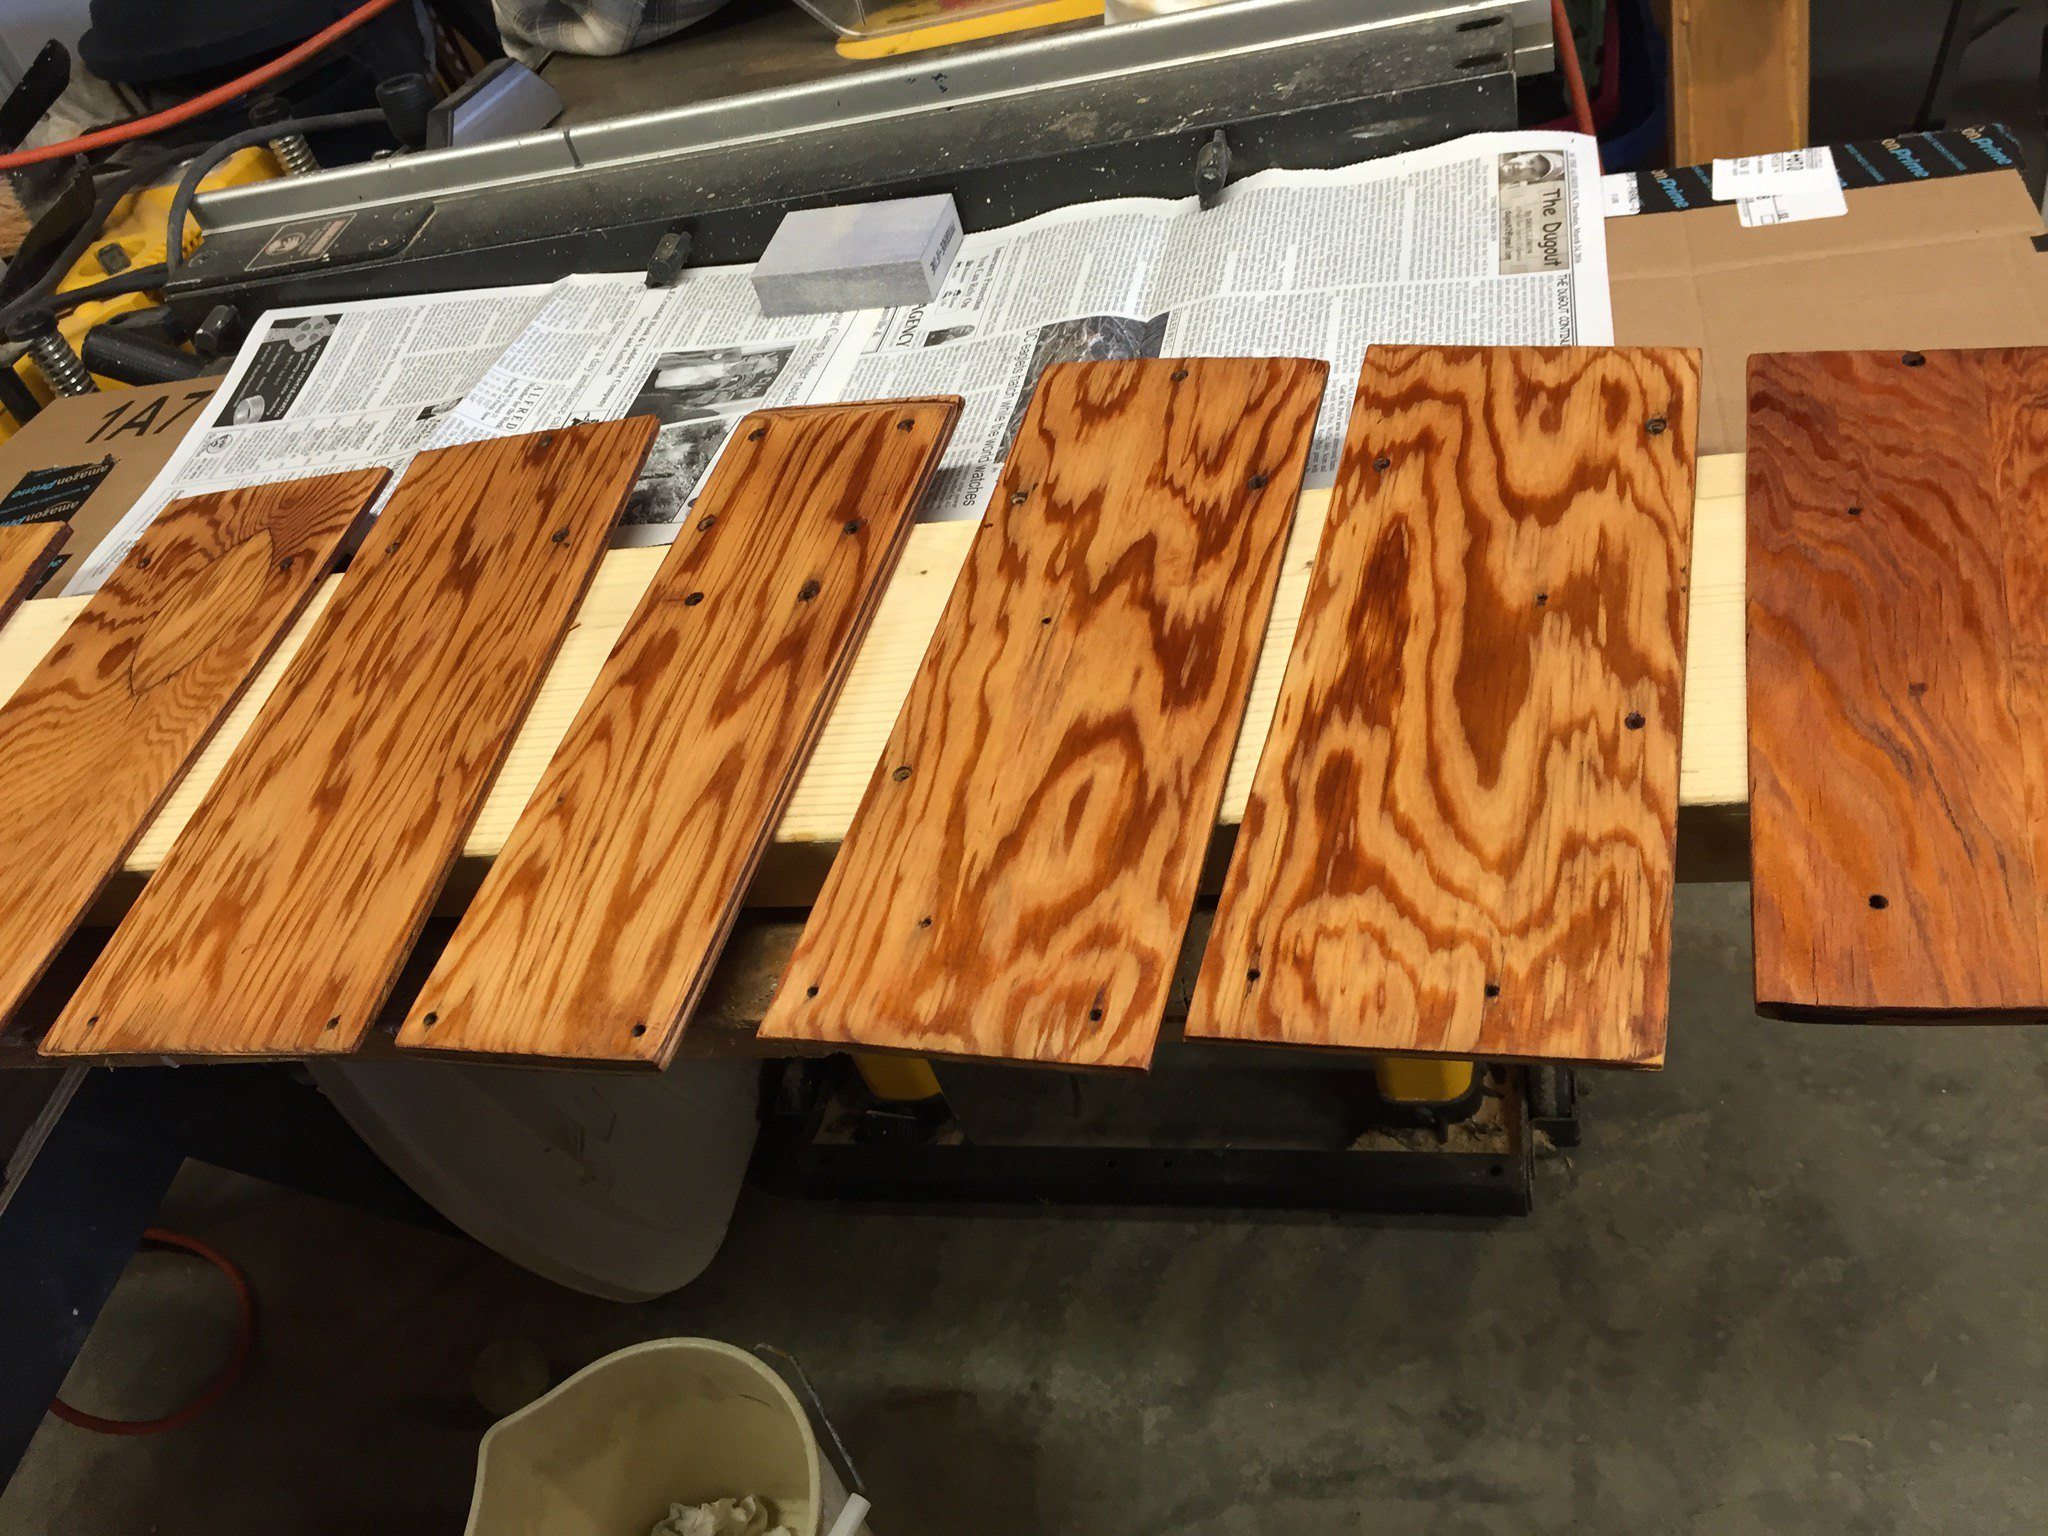 How To Make Plywood Look Nice, How To Make Plywood Look Like Hardwood Floors